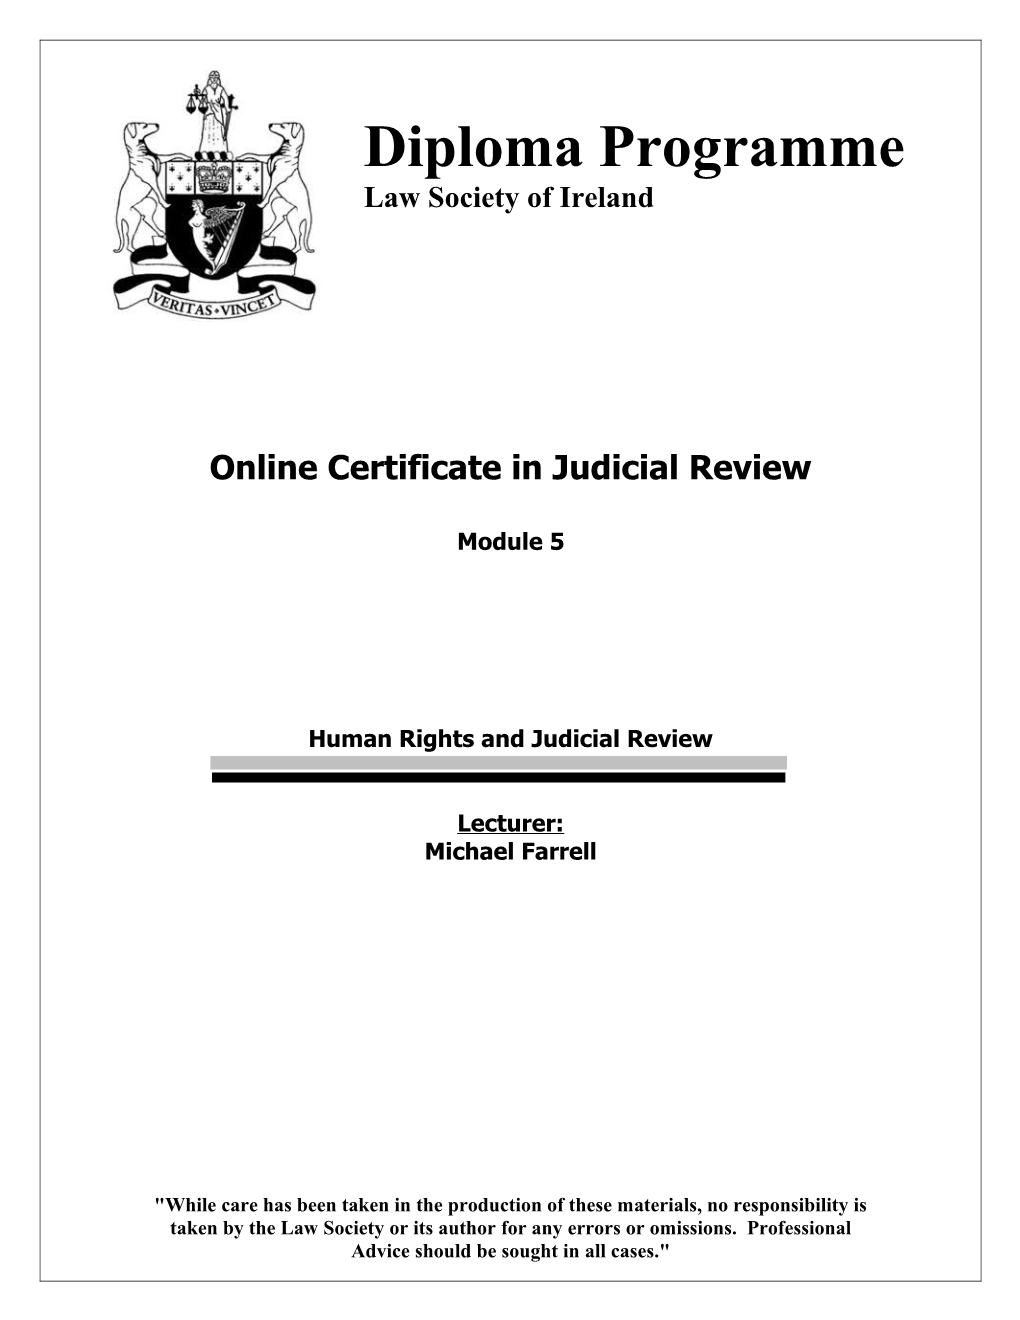 Online Certificate in Judicial Review